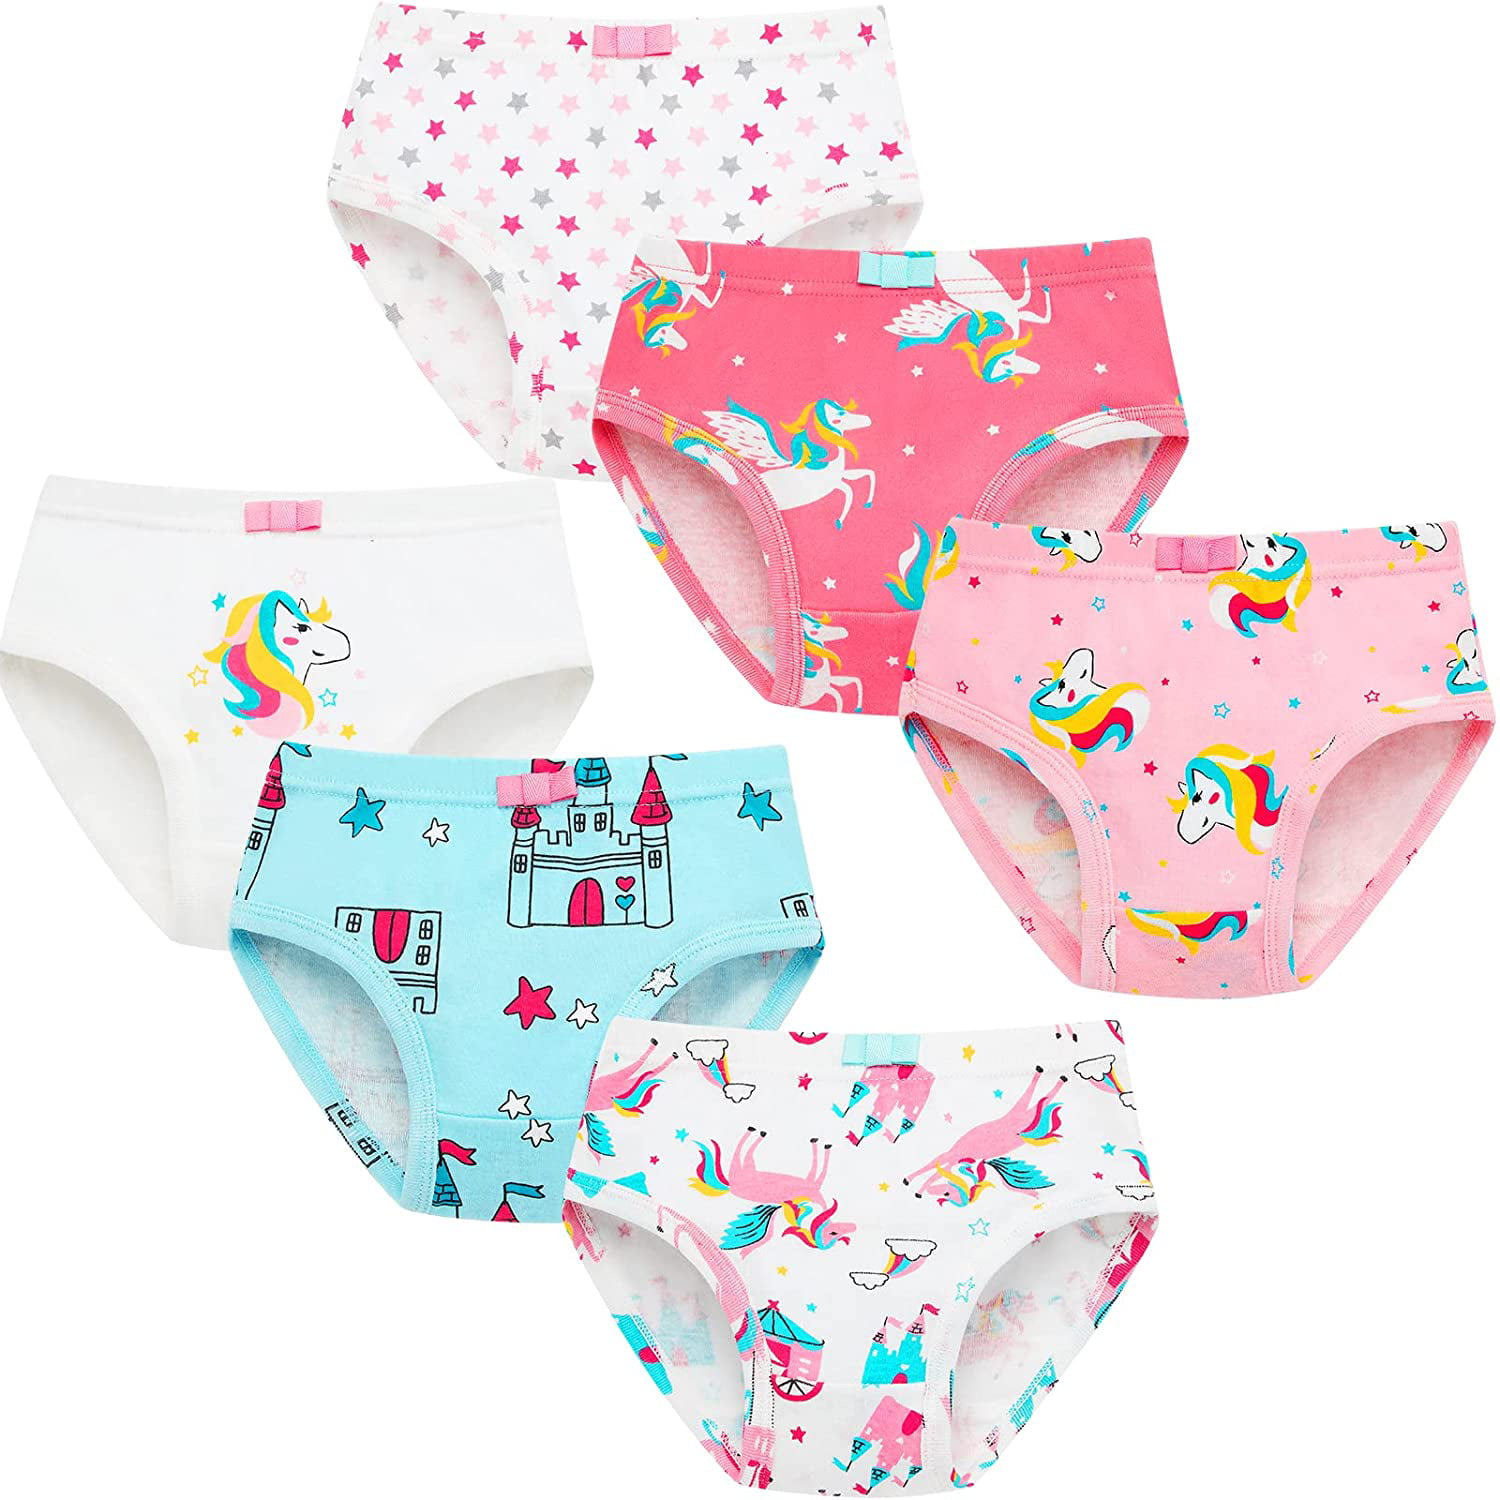 New 6 Packs Toddler Little Girls Cotton Underwear Briefs Kids Panties 2T 3T 